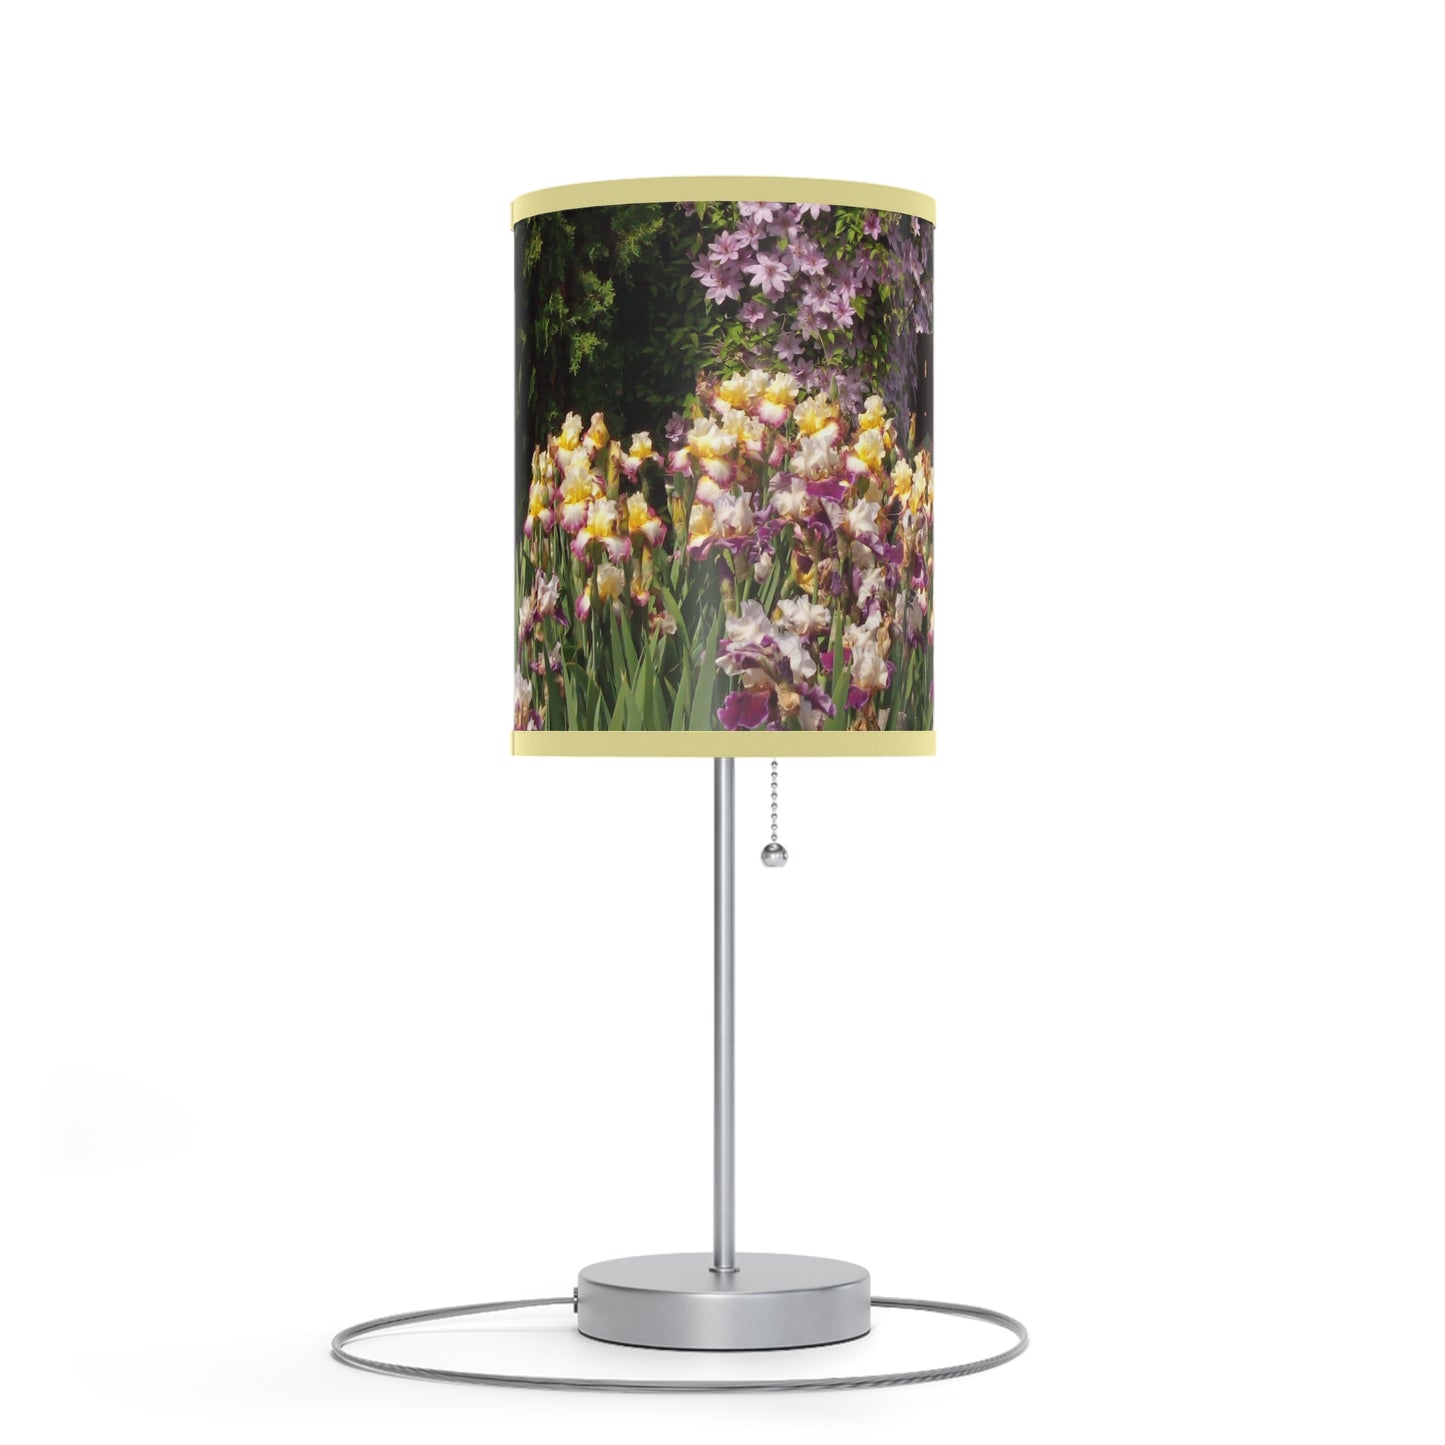 Sunny Iris Garden Lamp on a Stand